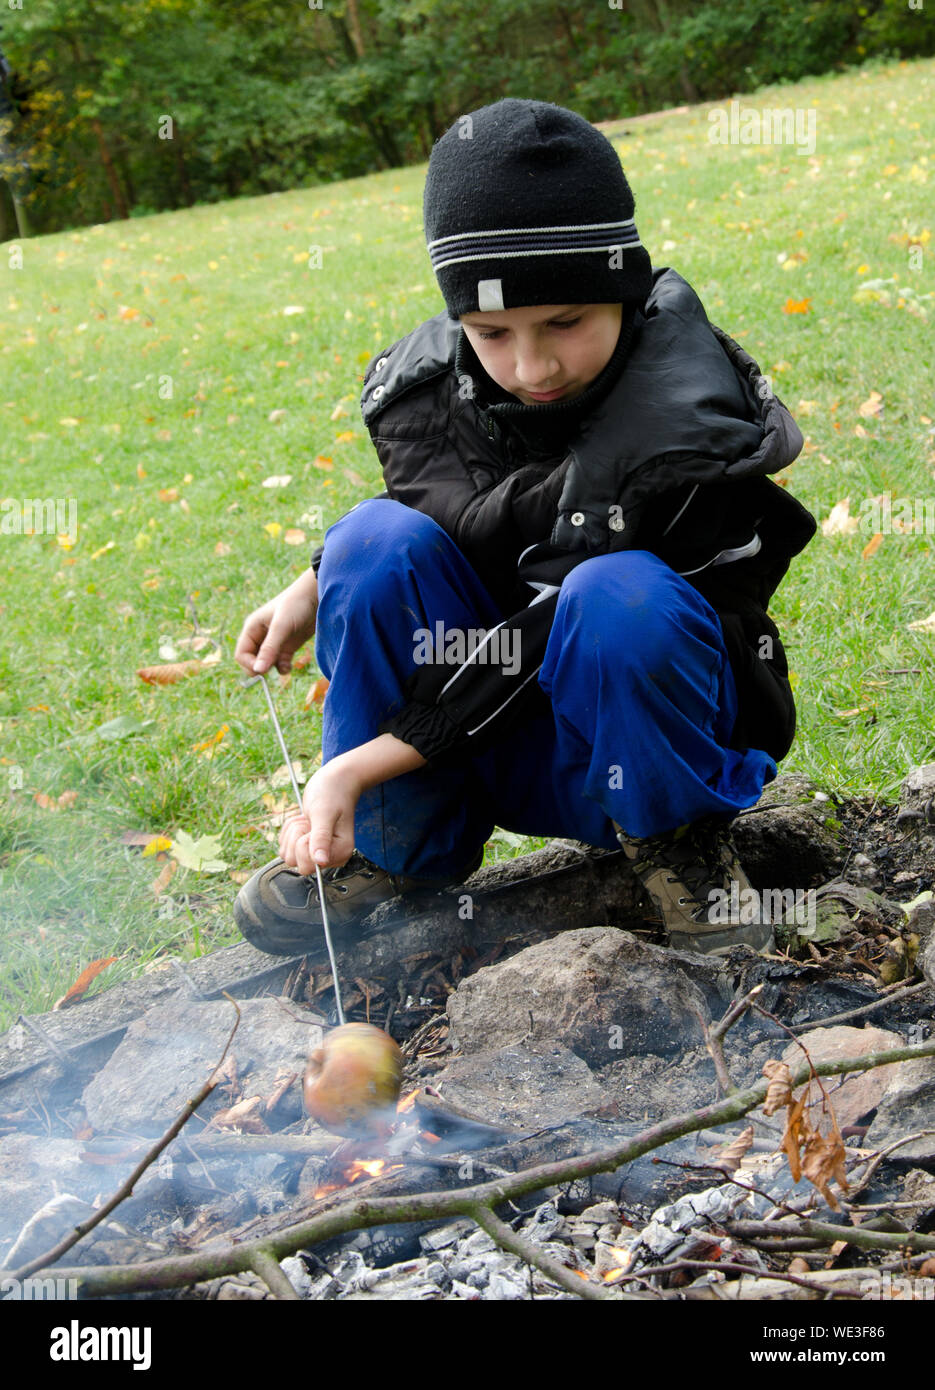 Boy Roasting Apple On Fire Pit Stock Photo